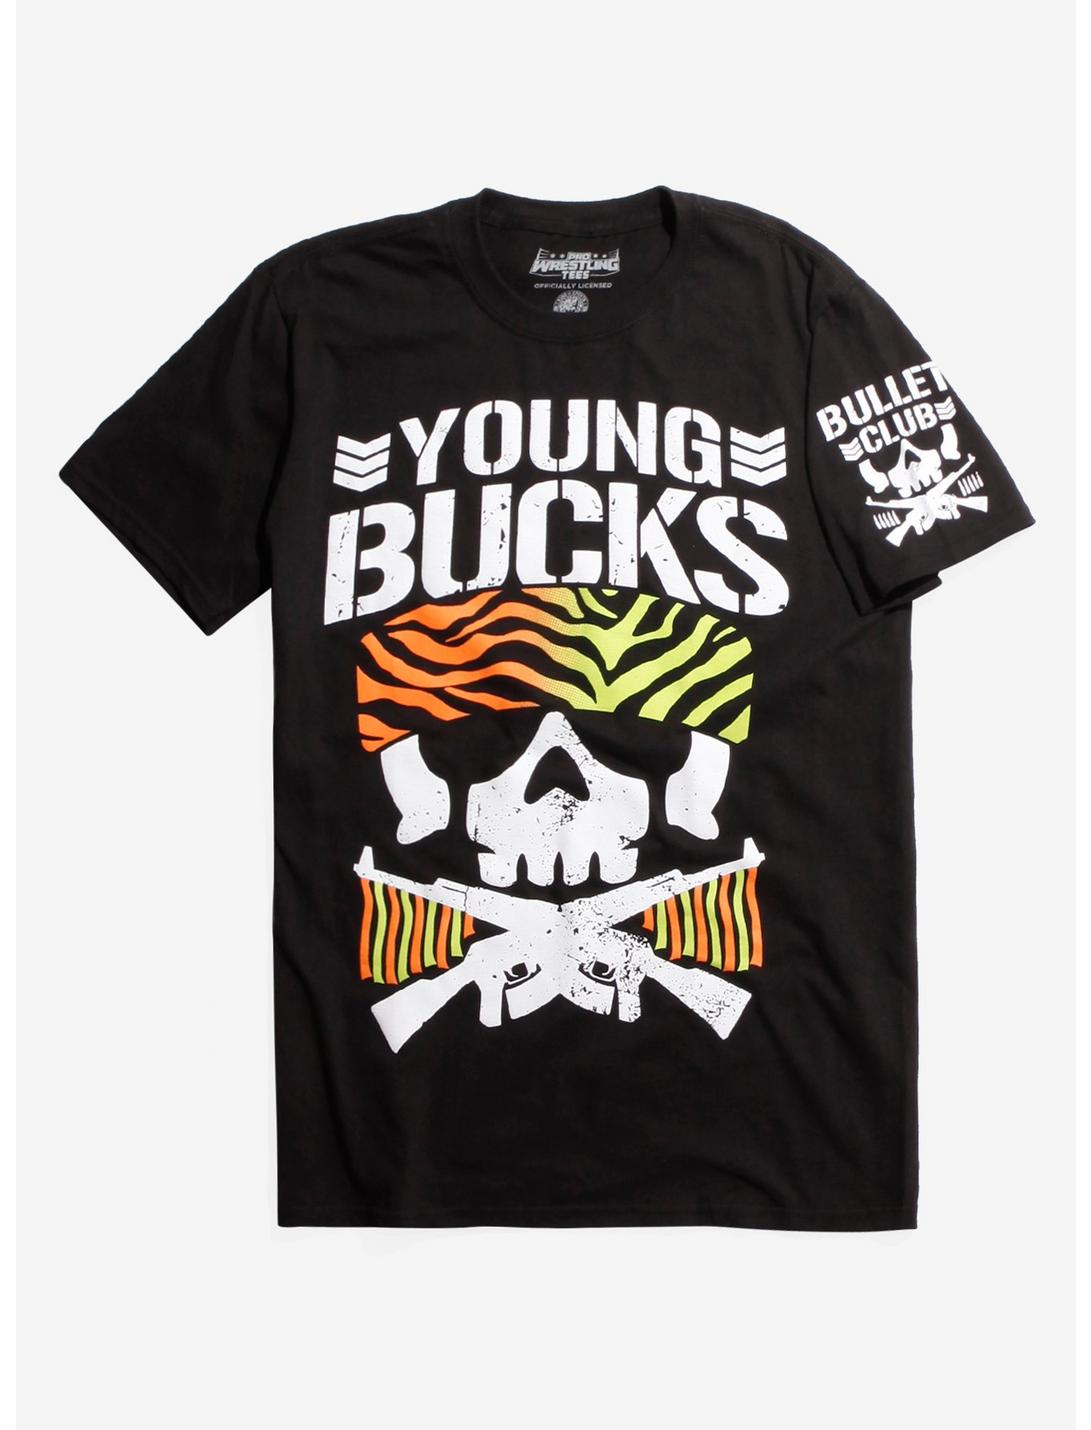 New Japan Pro-Wrestling Bullet Club Young Bucks Limited T-Shirt, BLACK, hi-res